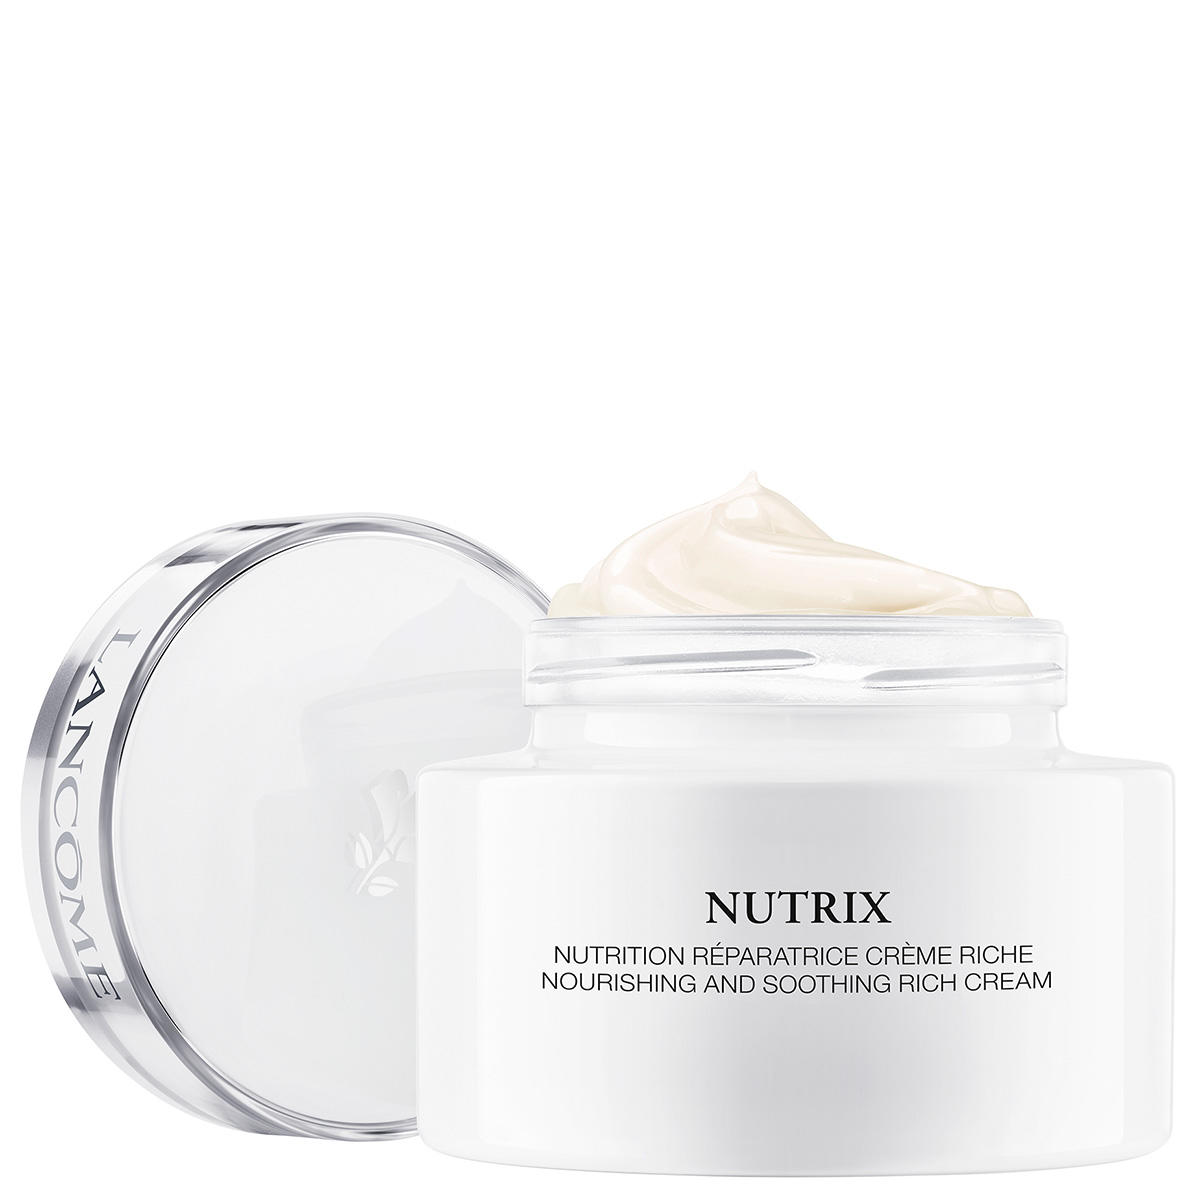 Lancôme Nutrix Nourishing and Soothing Rich Cream 75 ml - 4